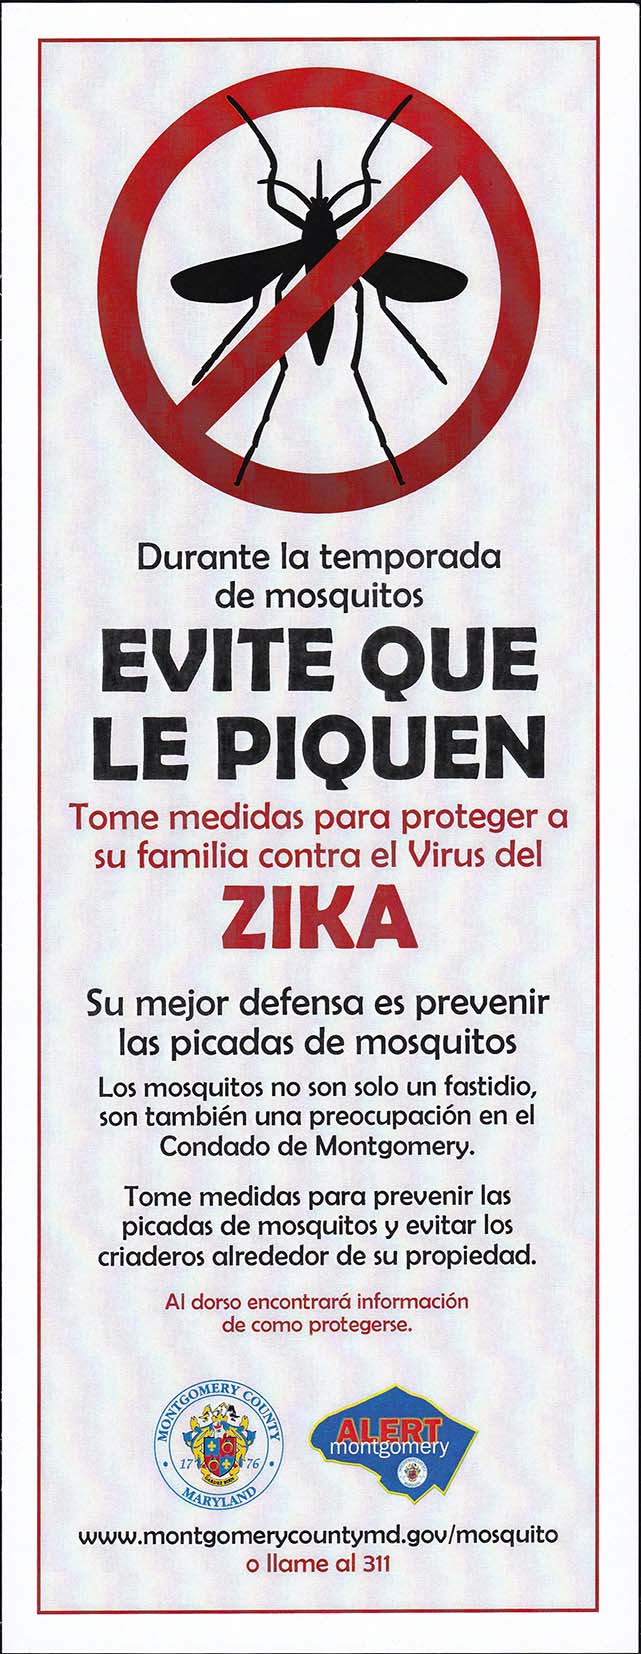 Fight The Bite, Zika Handout, Spanish - Side 1